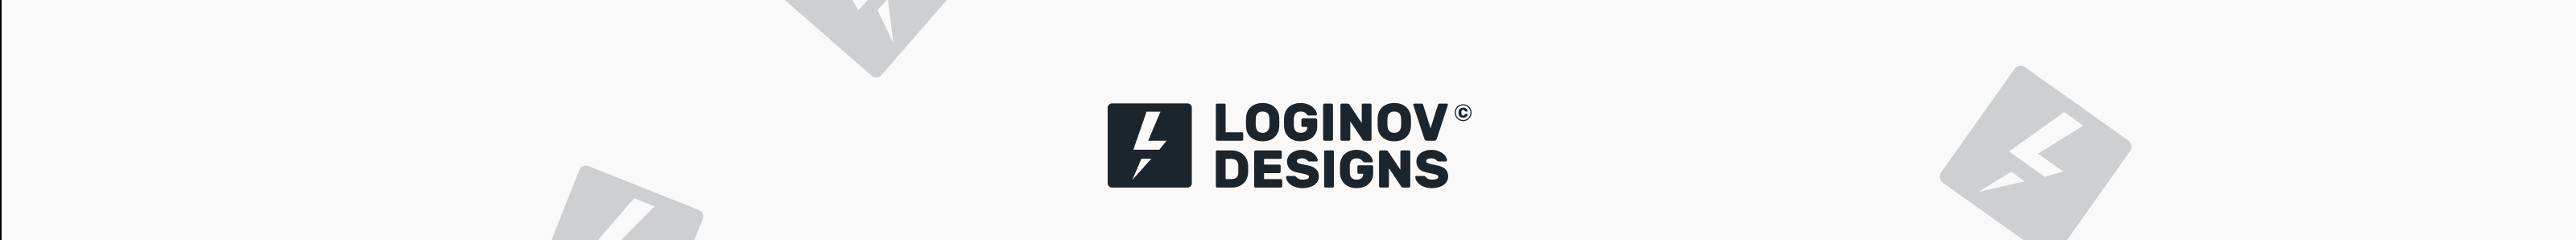 Loginov Designs's profile banner